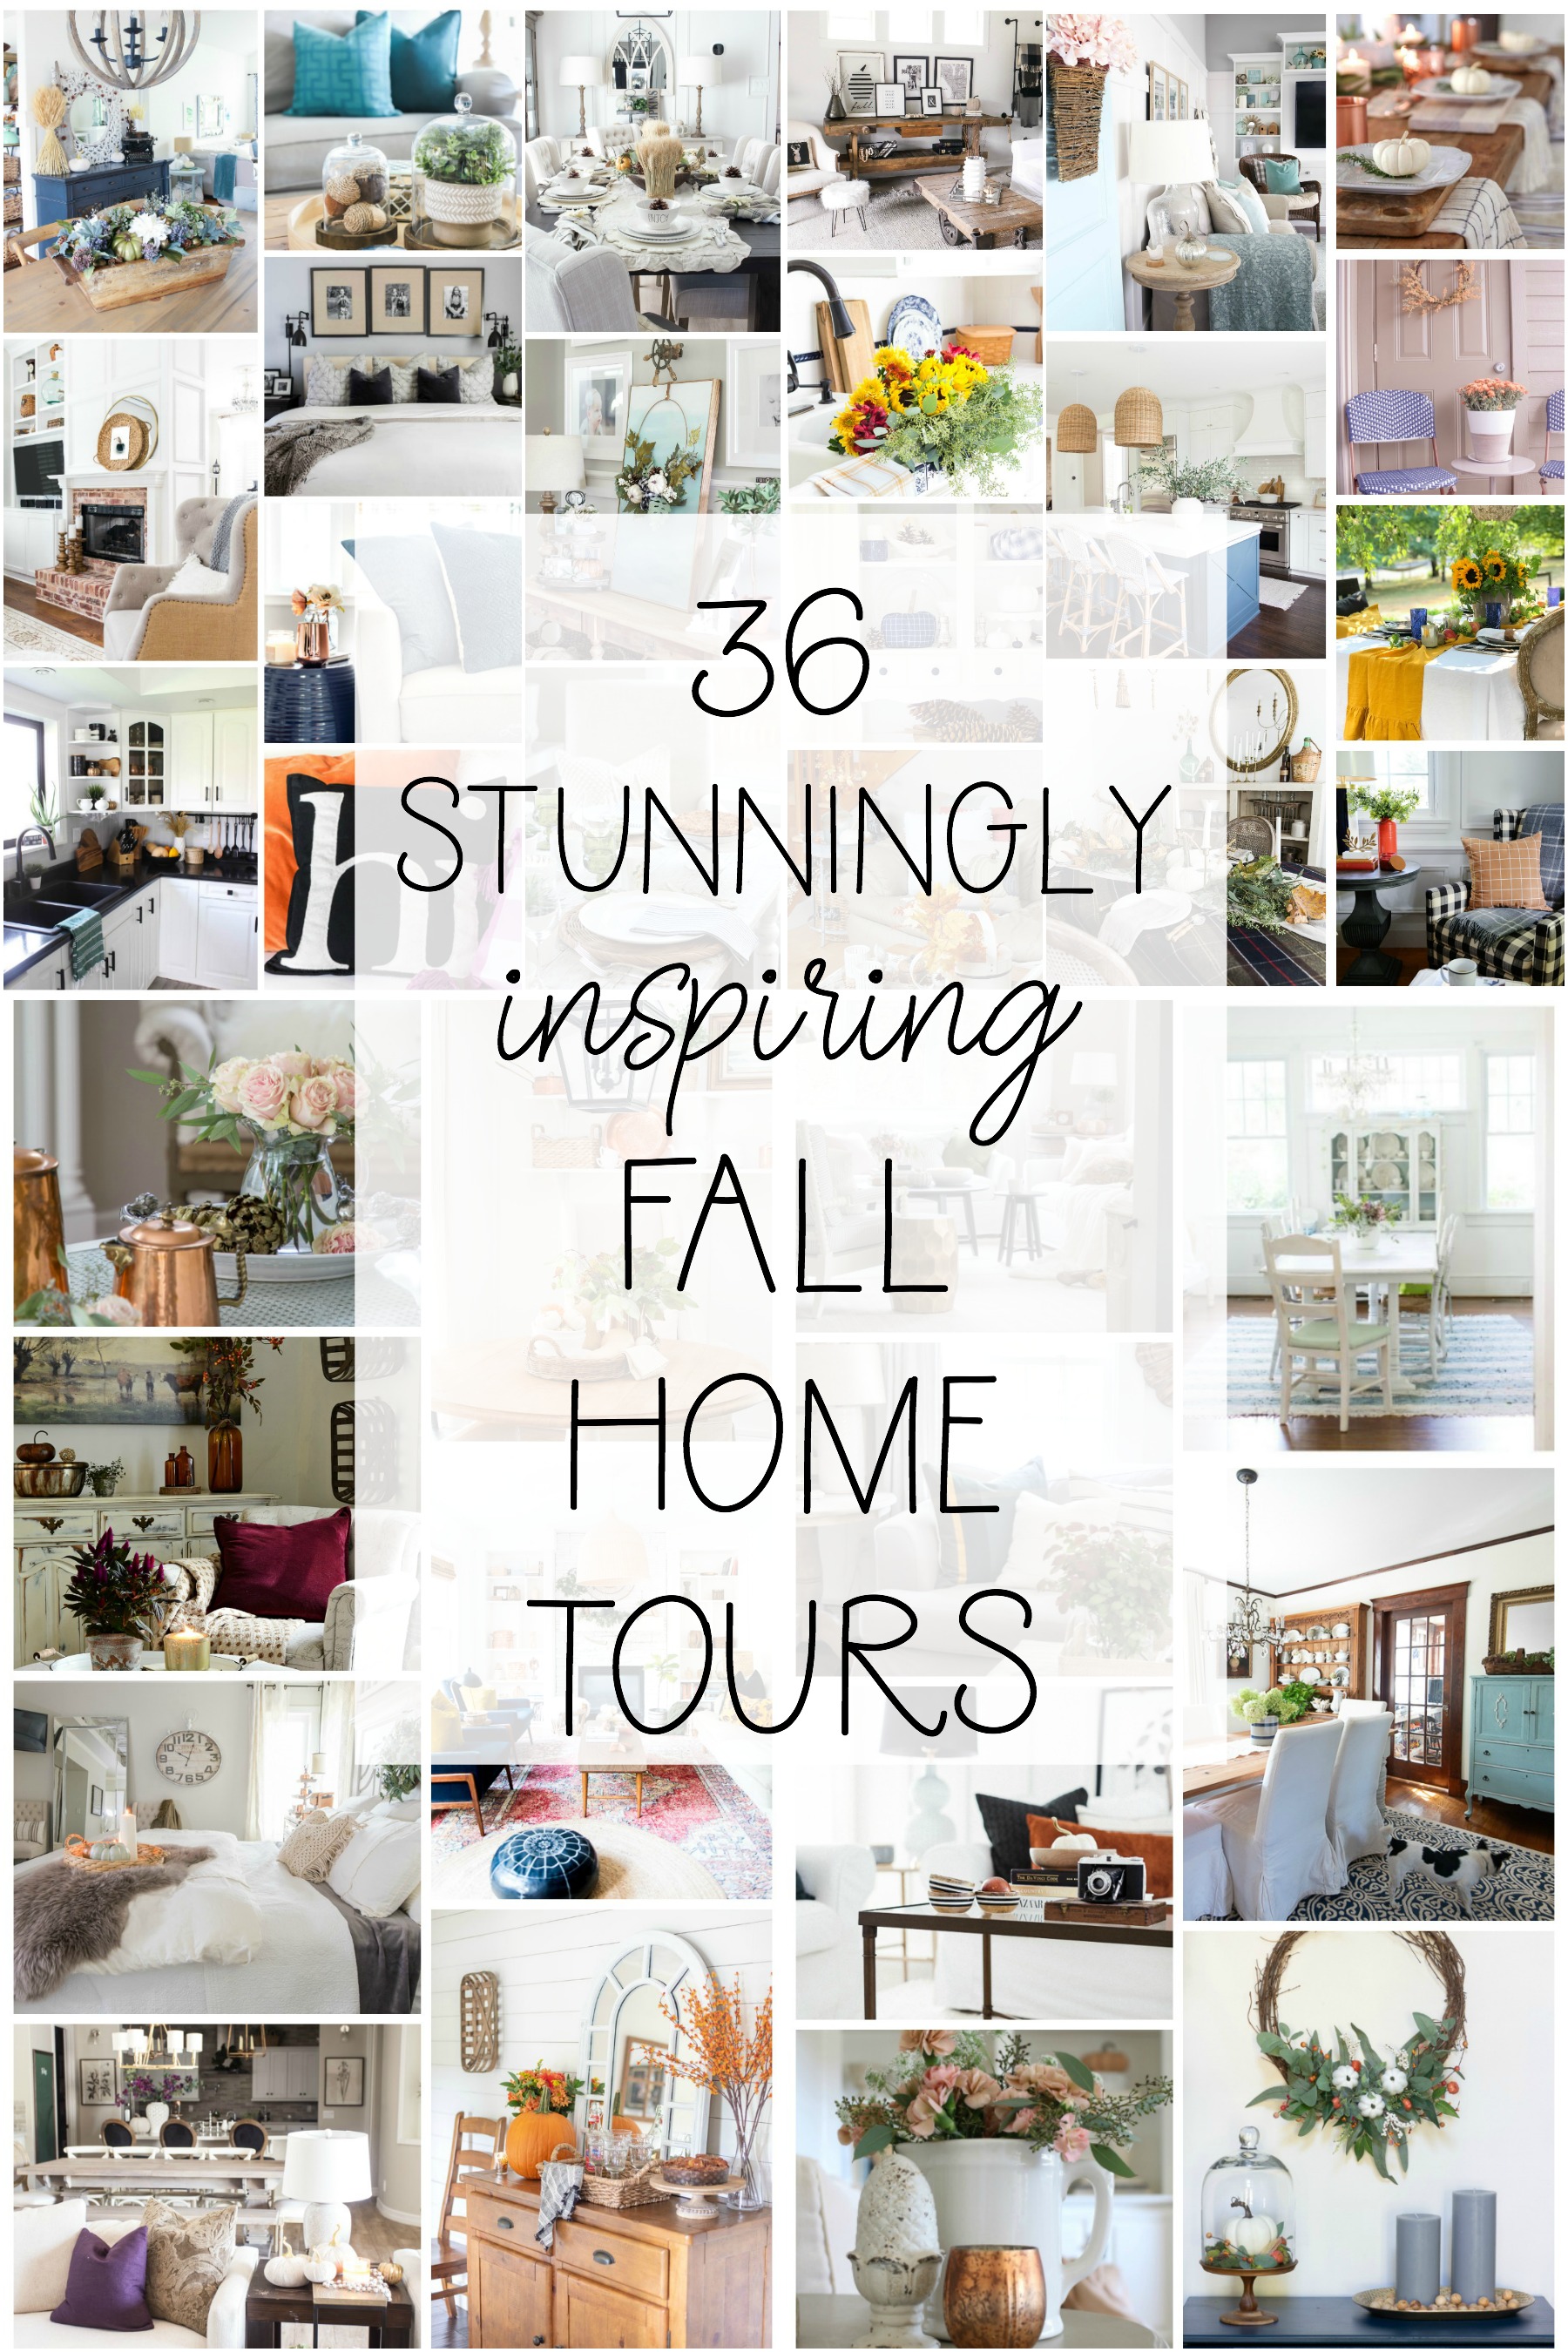 36 Stunningly Inspiring Fall Home Tours poster.